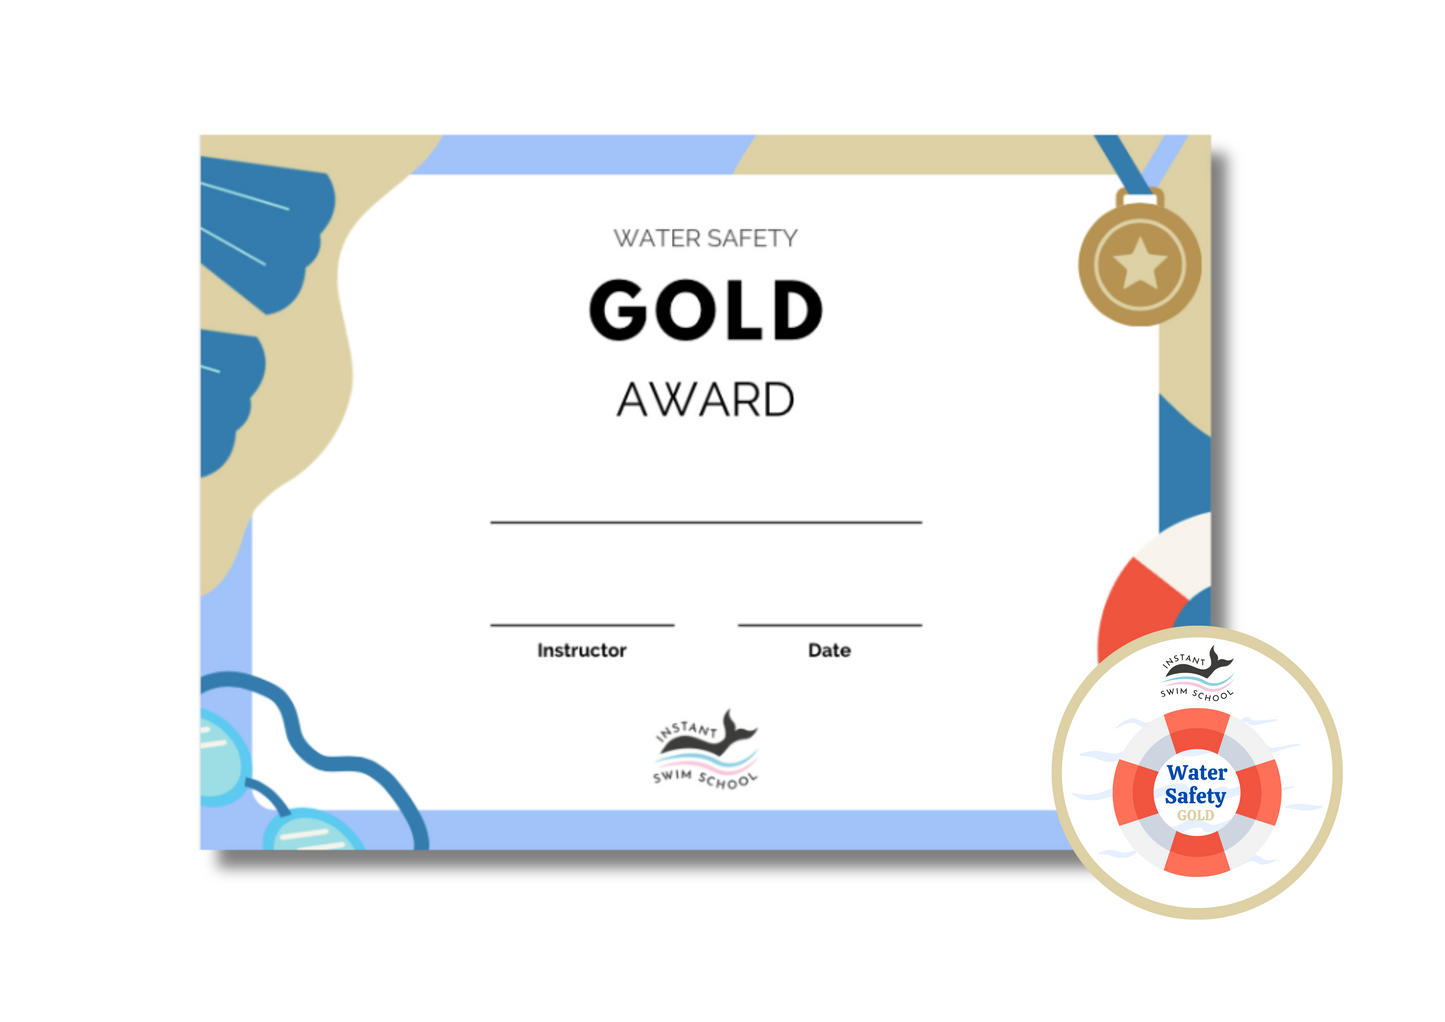 Gold Water Safety Award